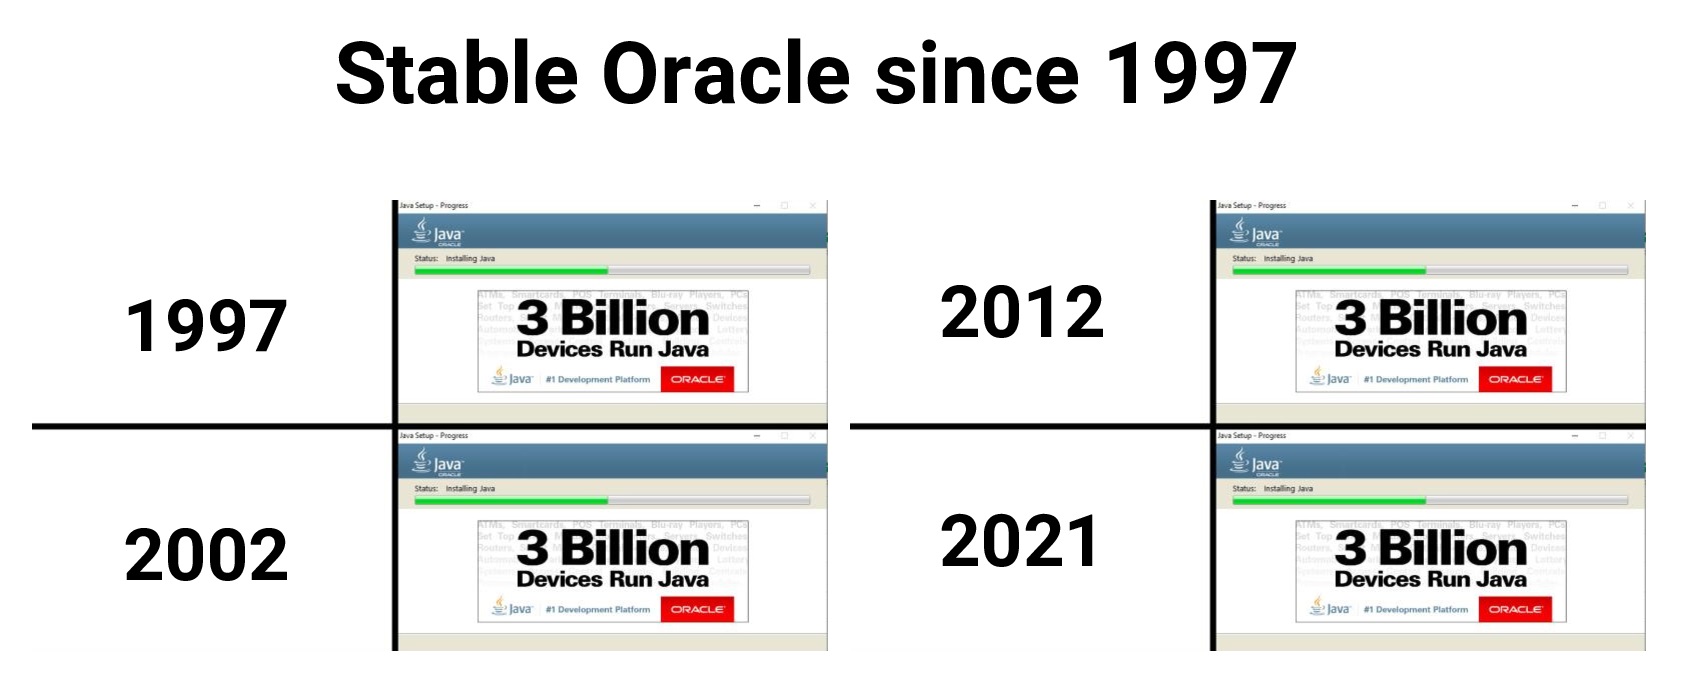 Стабильный Oracle c 1997 года